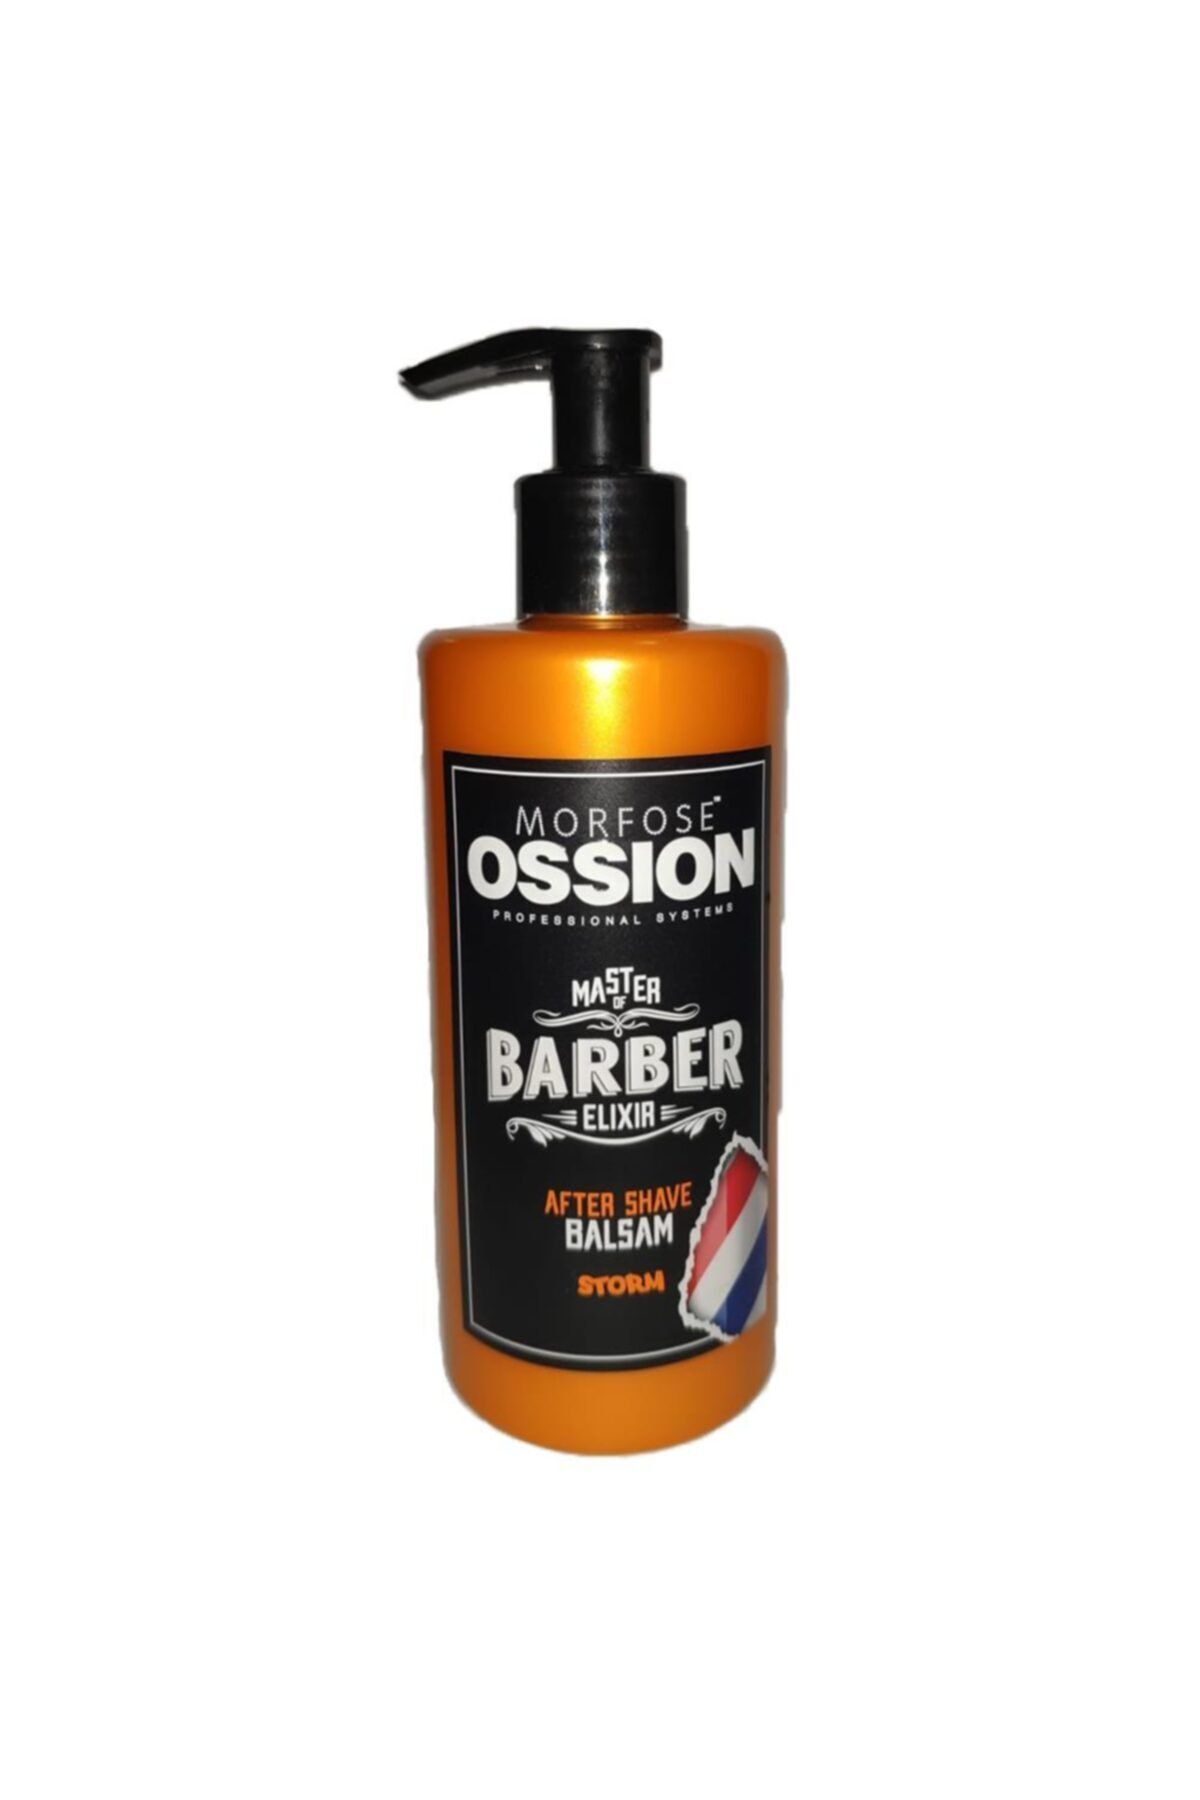 Morfose Ossion After Shave Balsam Storm 300ml